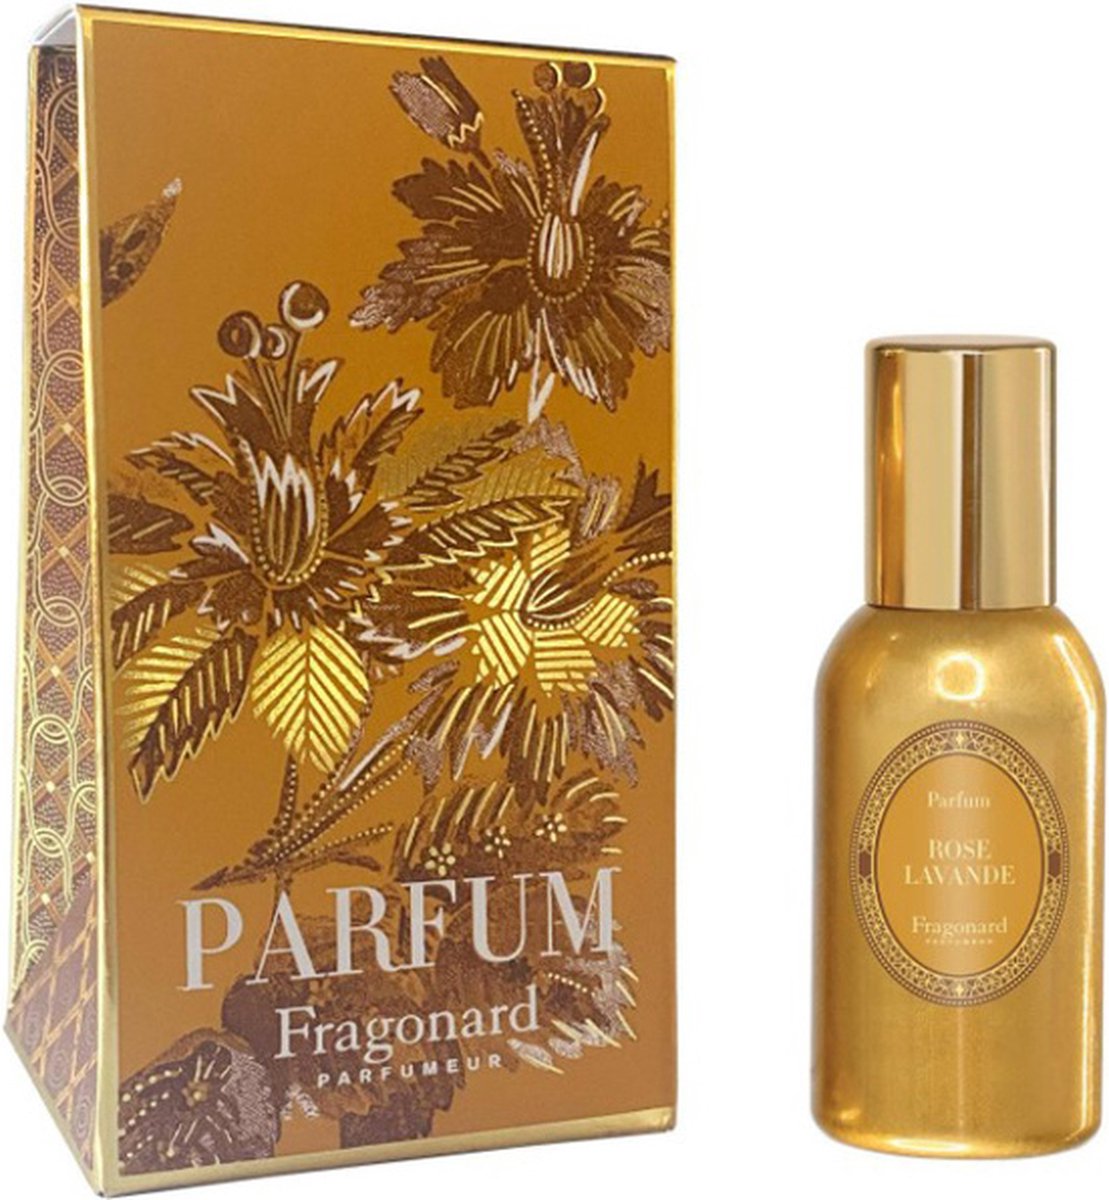 Fragonard Parfum Fragrance Rose Lavande The Perfume